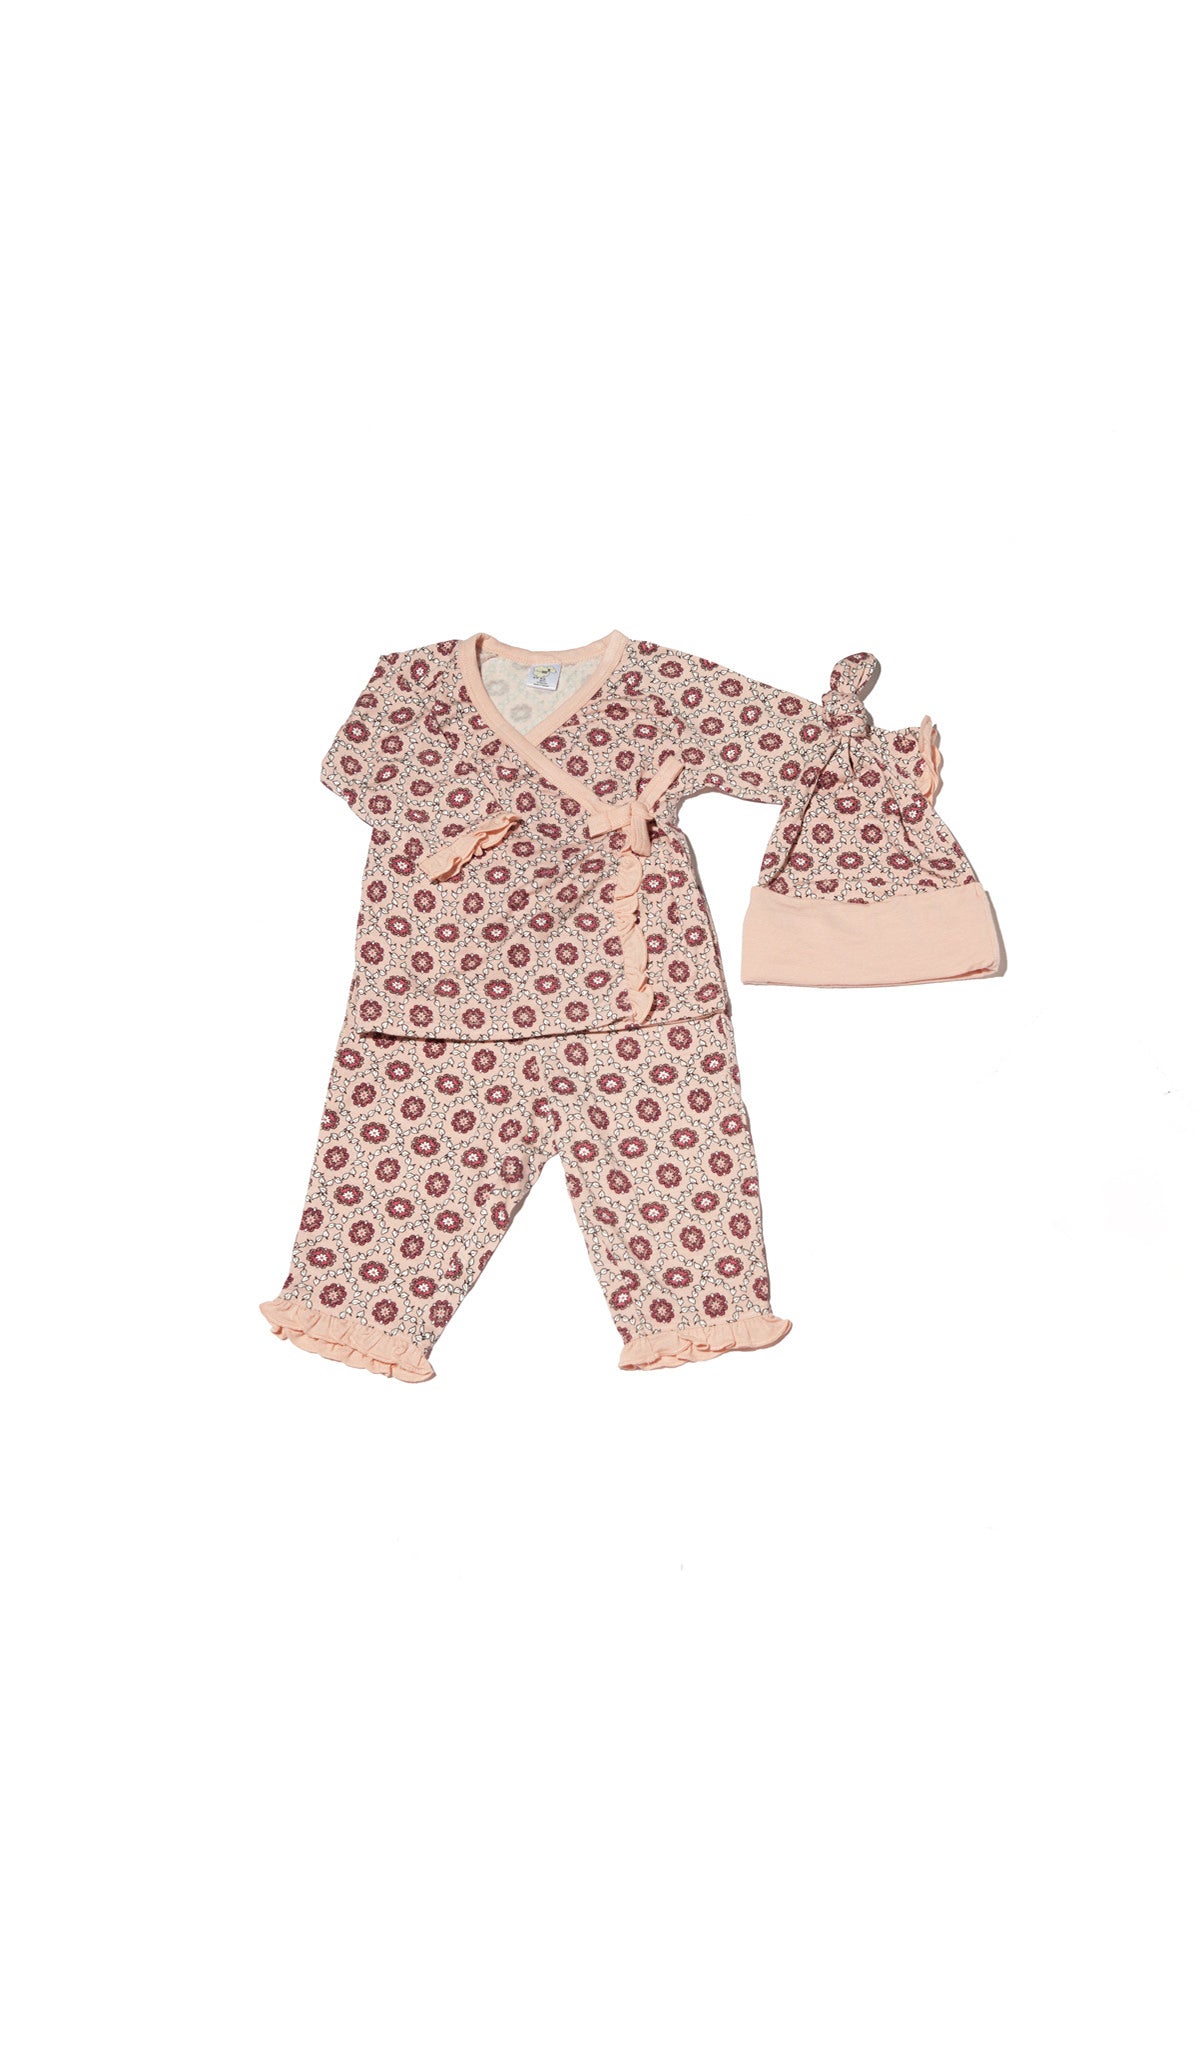 Baby's Ruffle Take-Me-Home 3 Piece - Pink Blush flat shot of ruffled kimono top, ruffled pant and matching knotted baby hat.